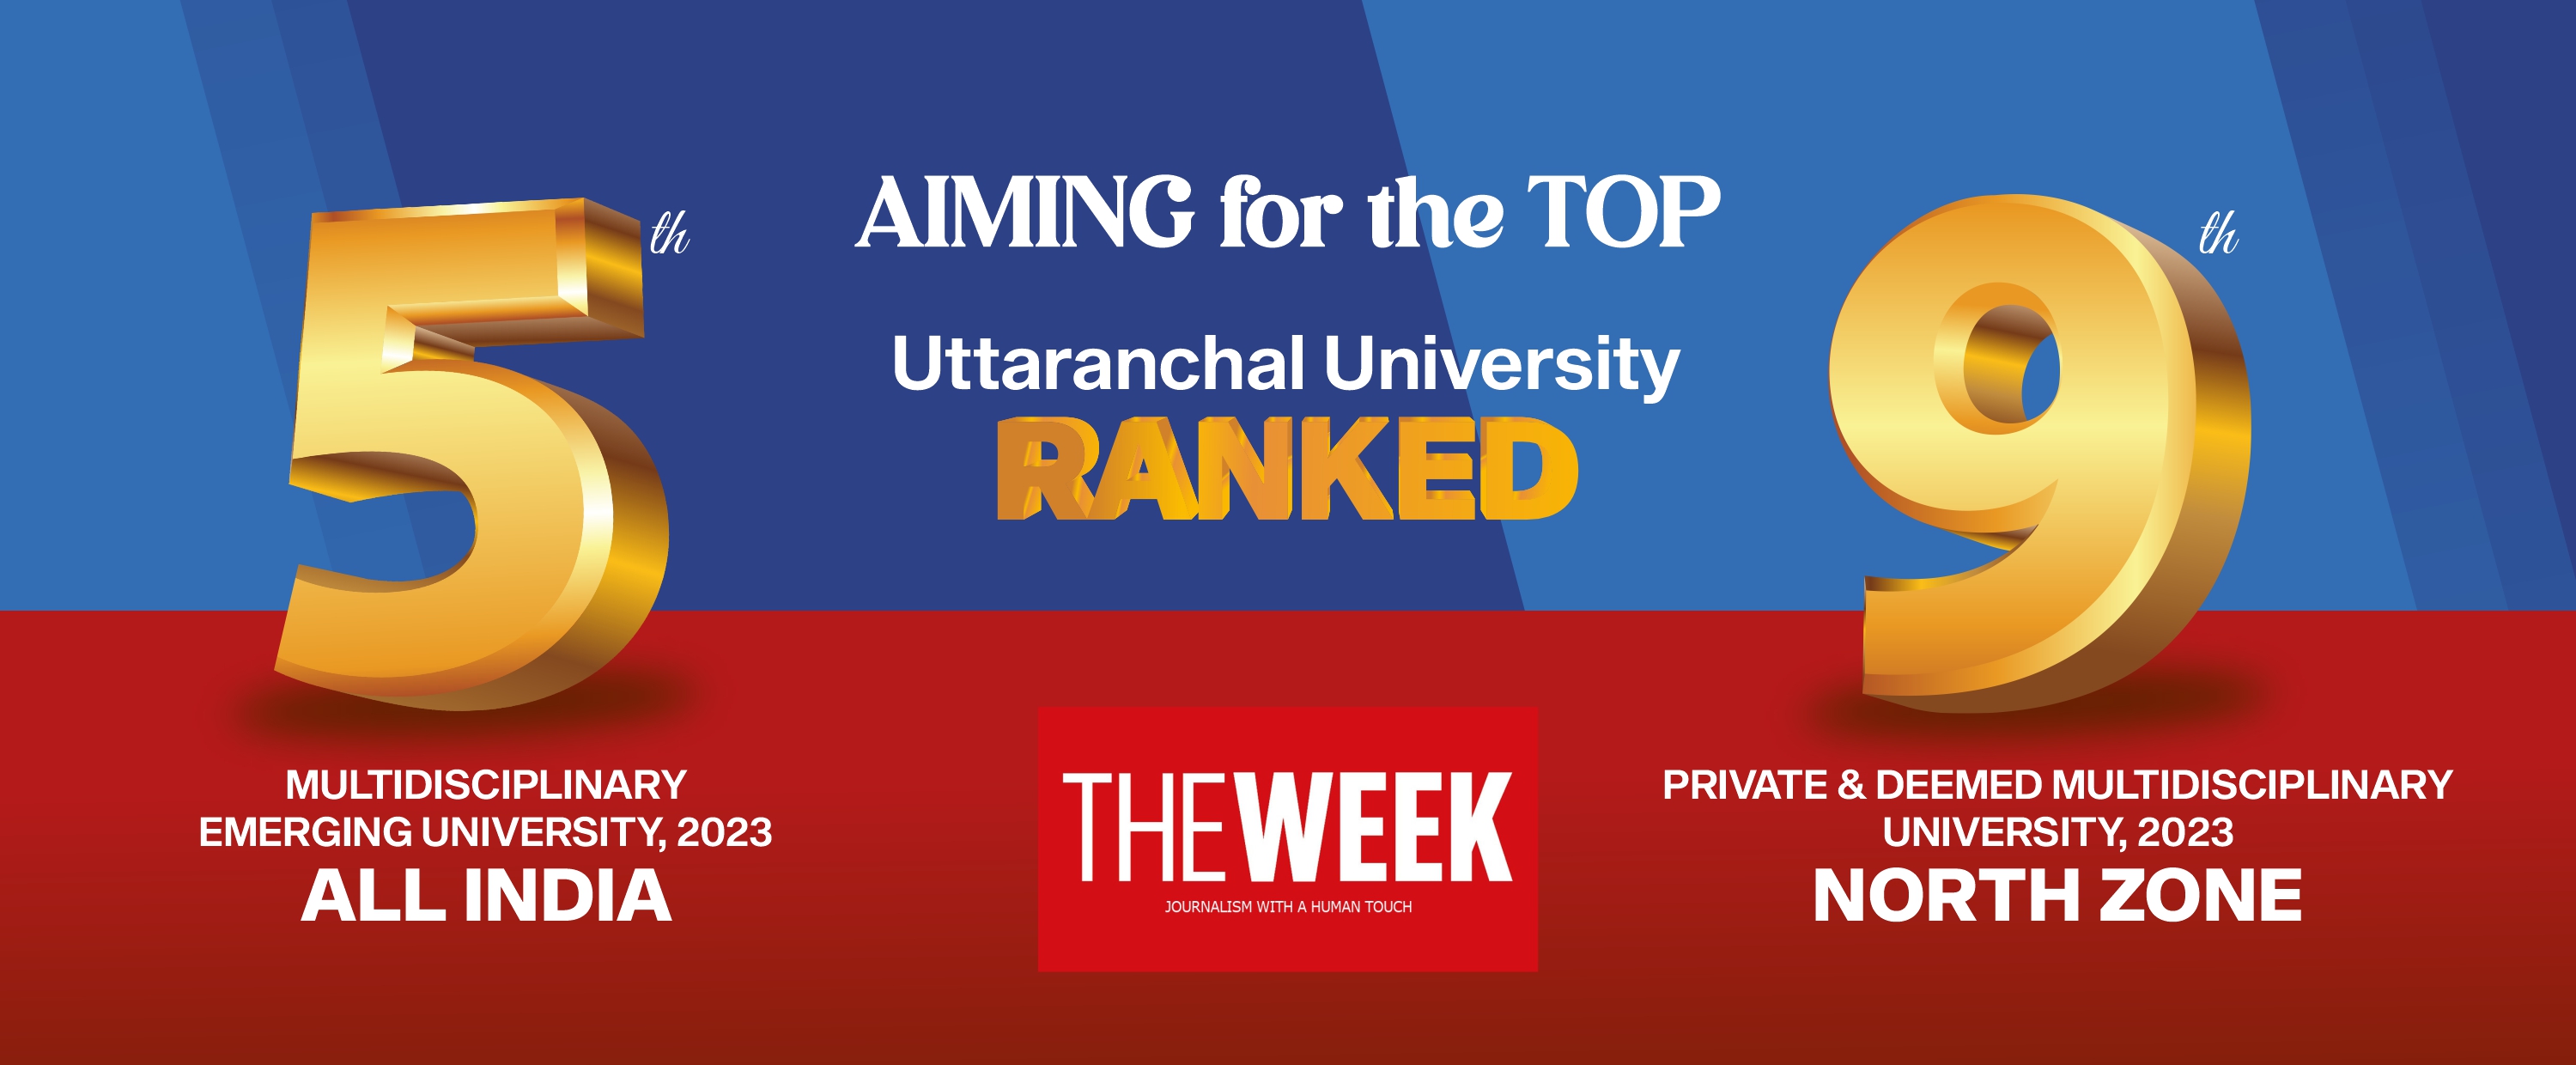 UGC Entitled Online Degree Programs at Uttaranchal University